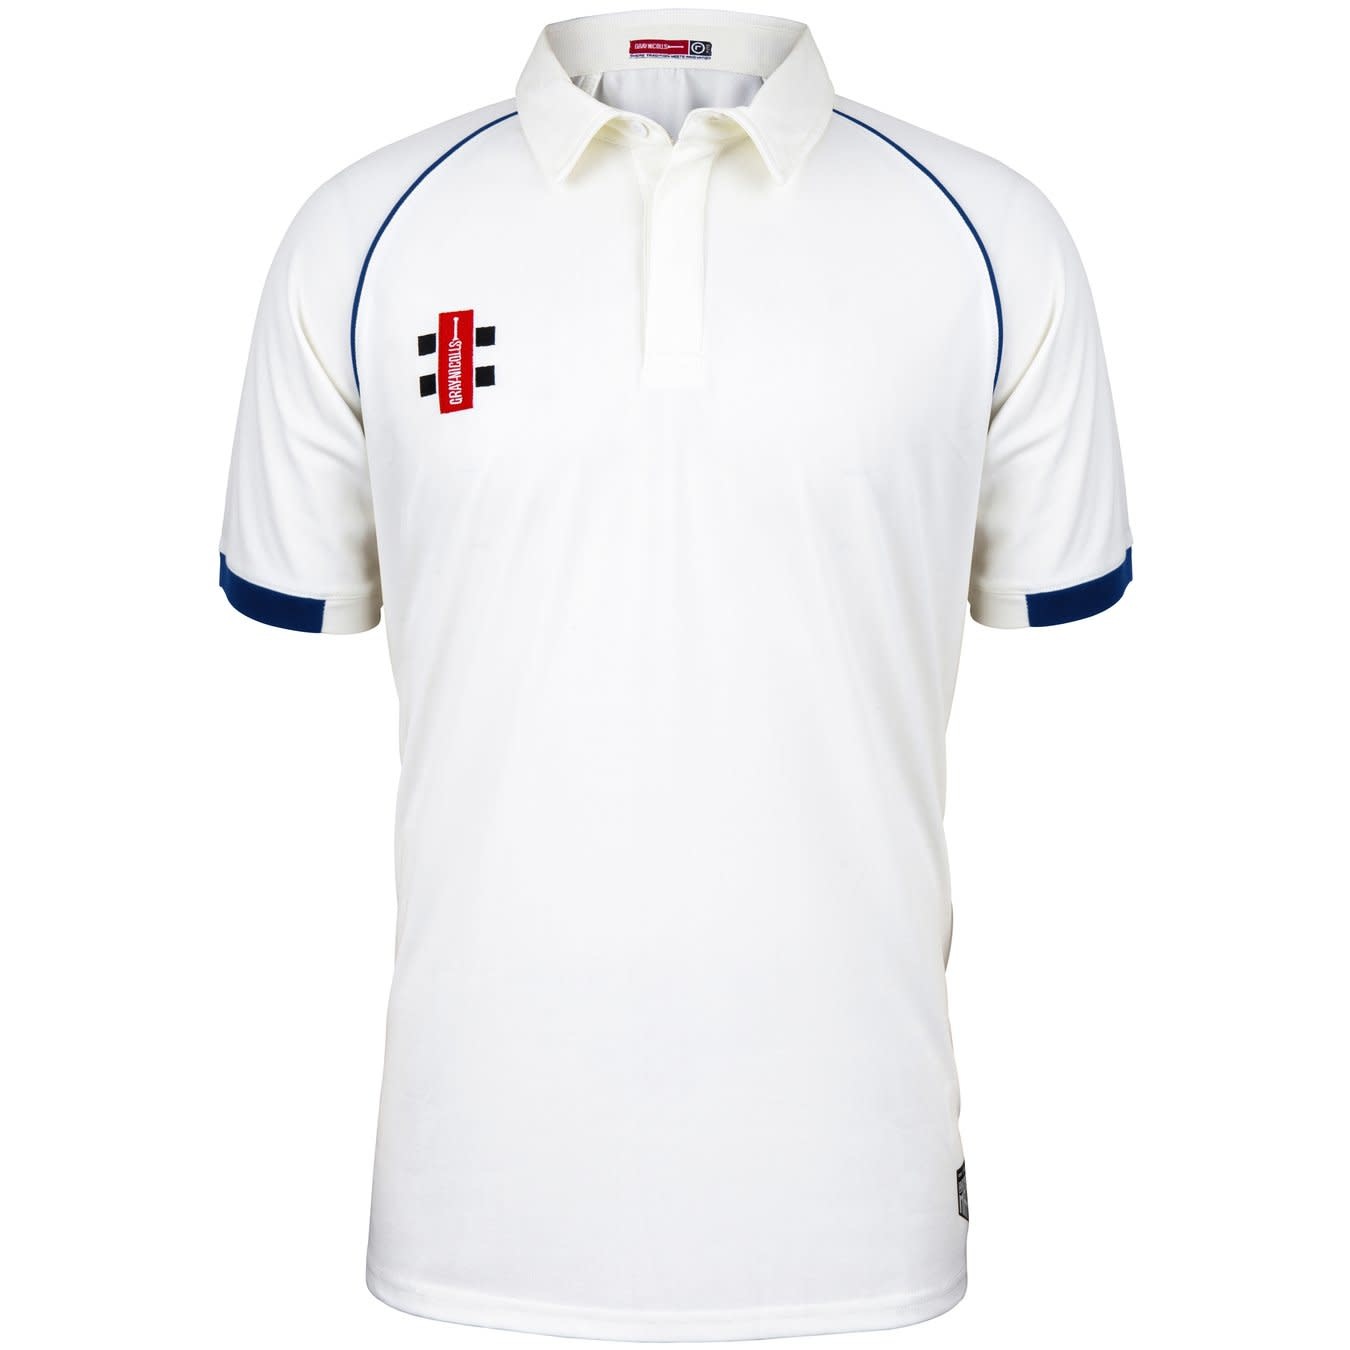 Adults Matrix V2 S/S Cricket Shirt